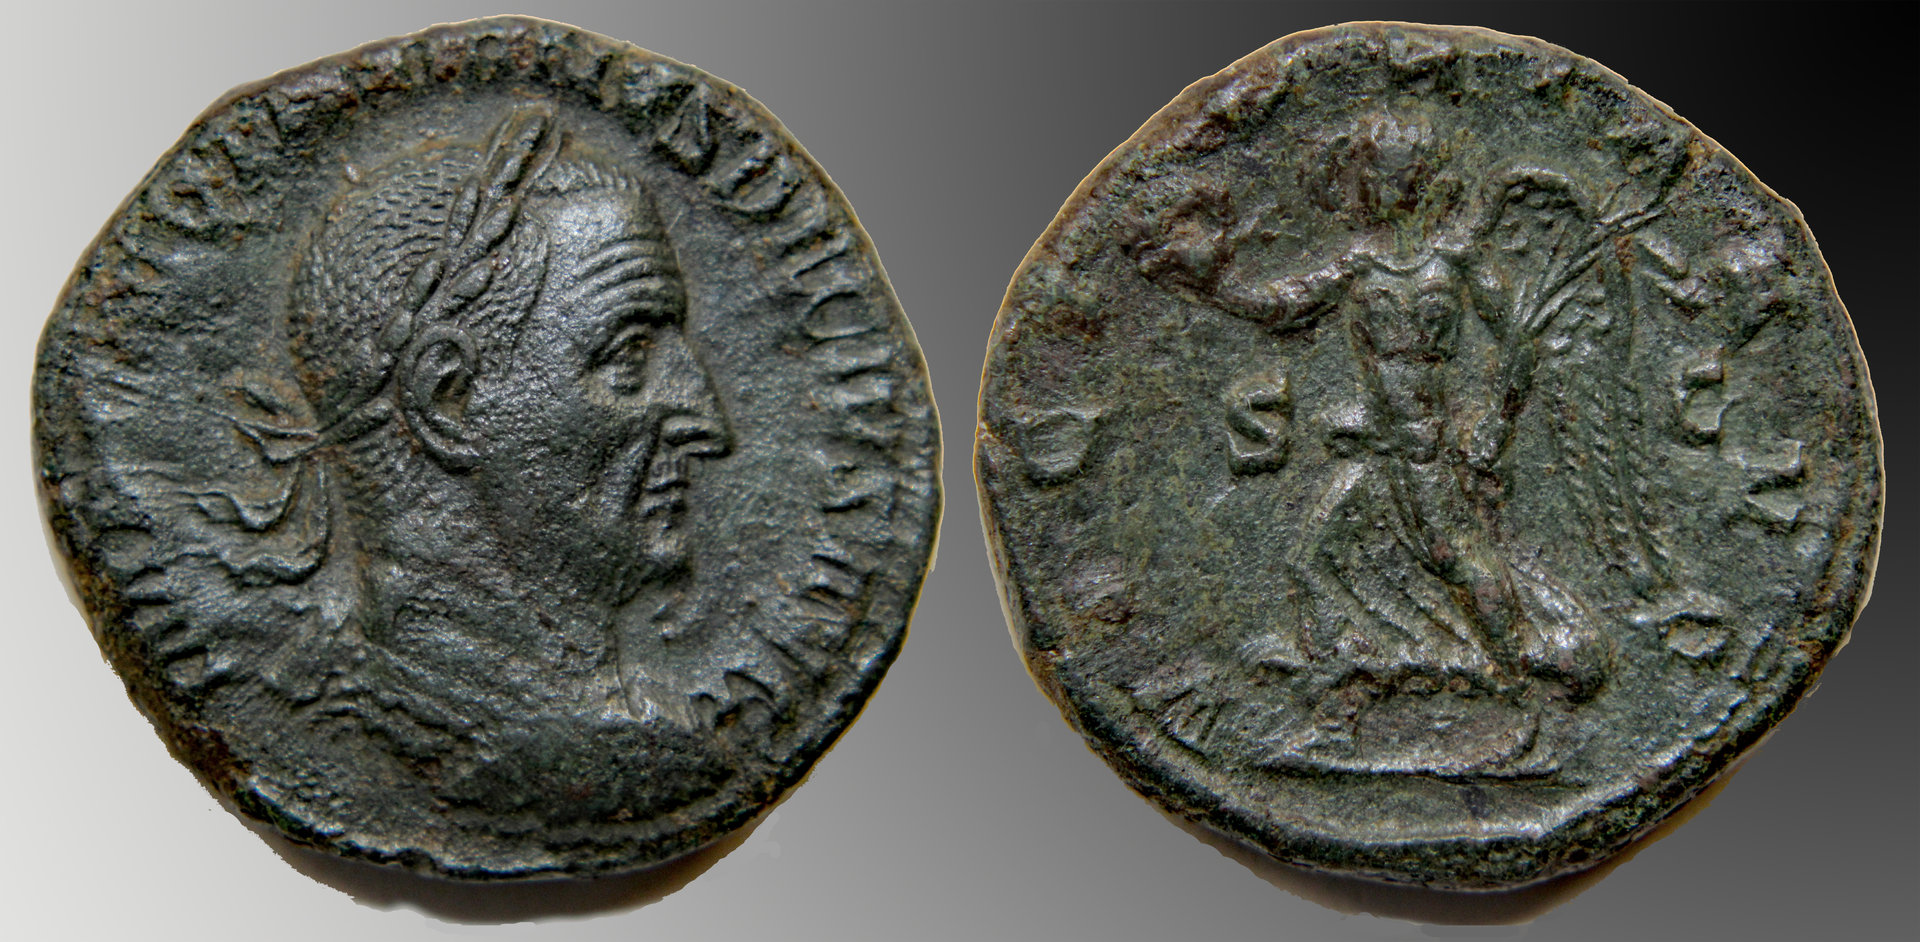 D-Camera  Trajan Decius sestertius, Victory Avg SC,, RIC 126, 18.6 g  01-03-21.jpg